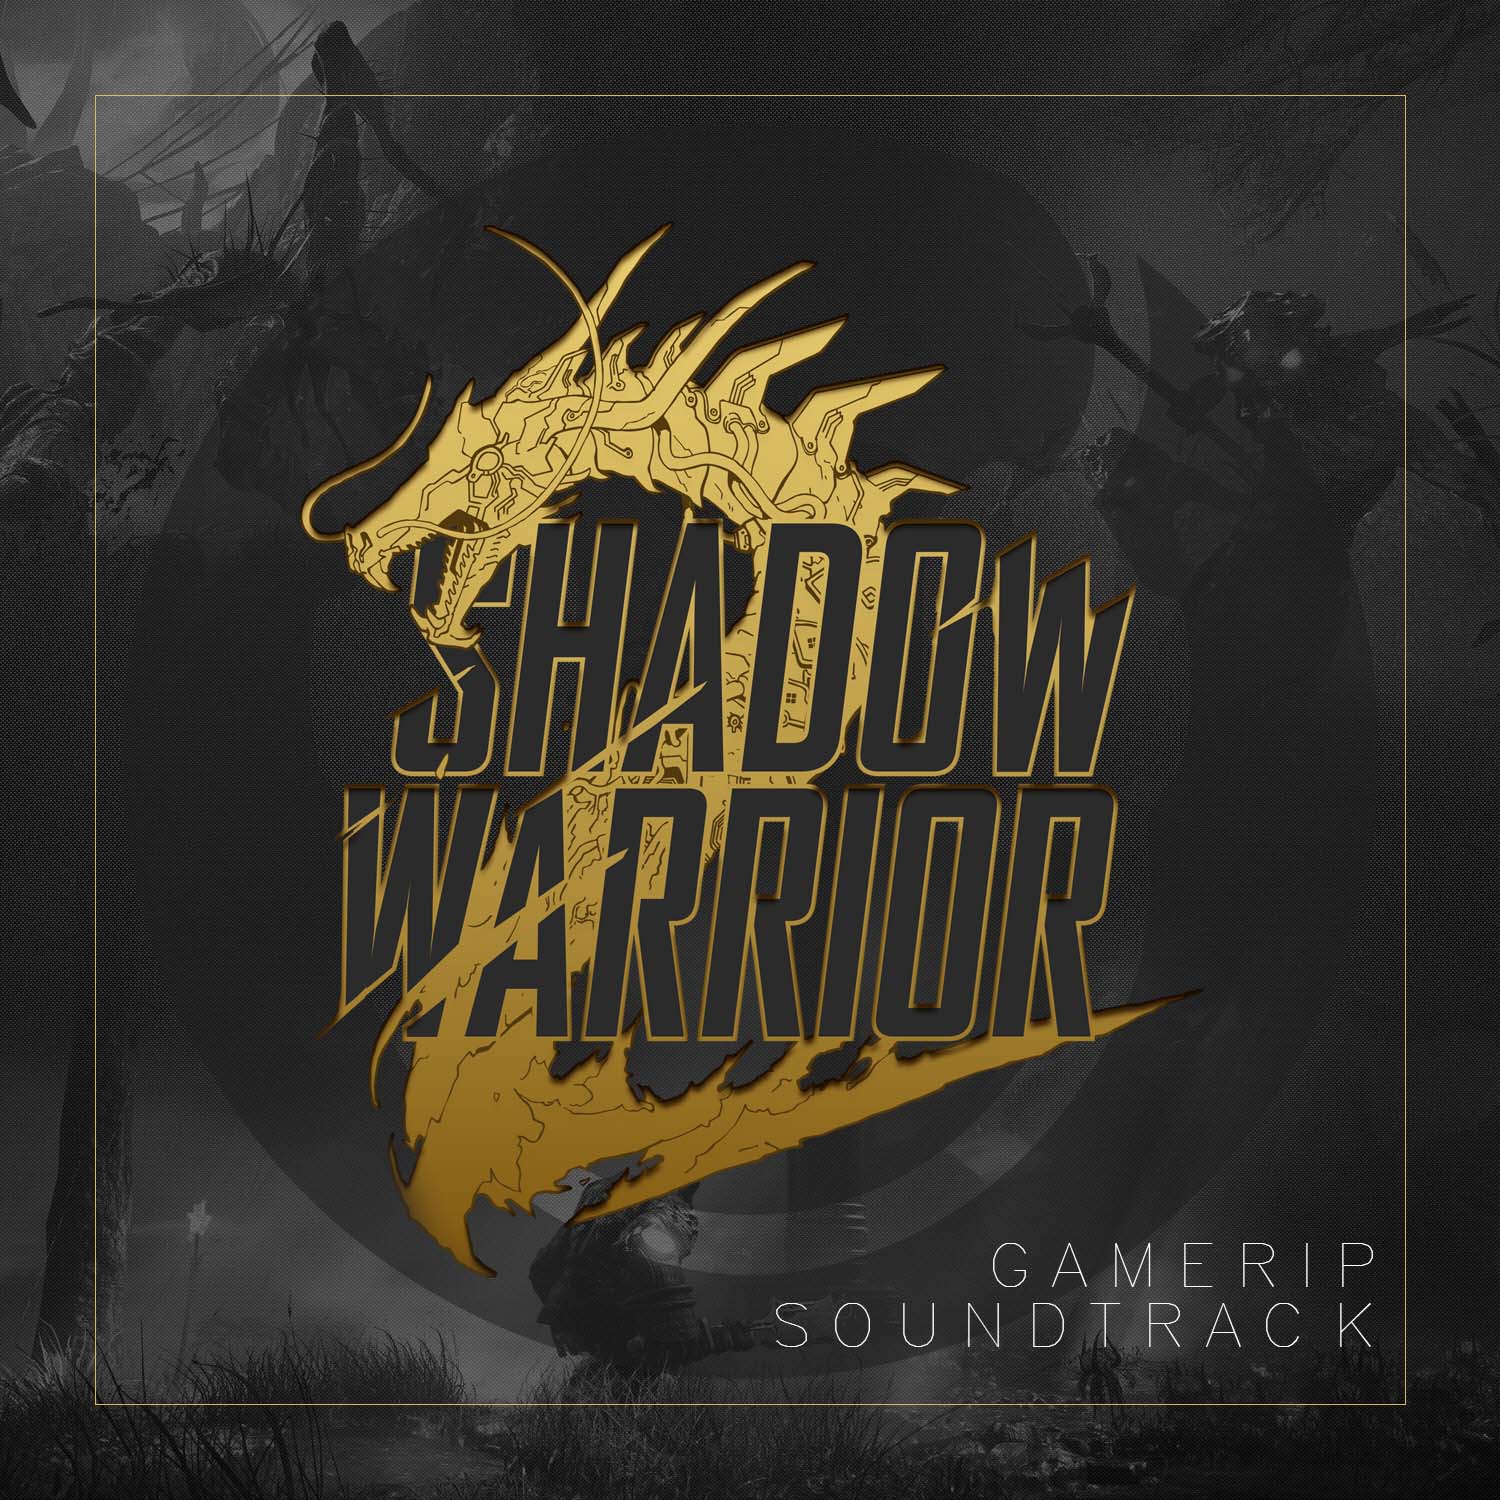 download shadow warrior 2 eneba for free